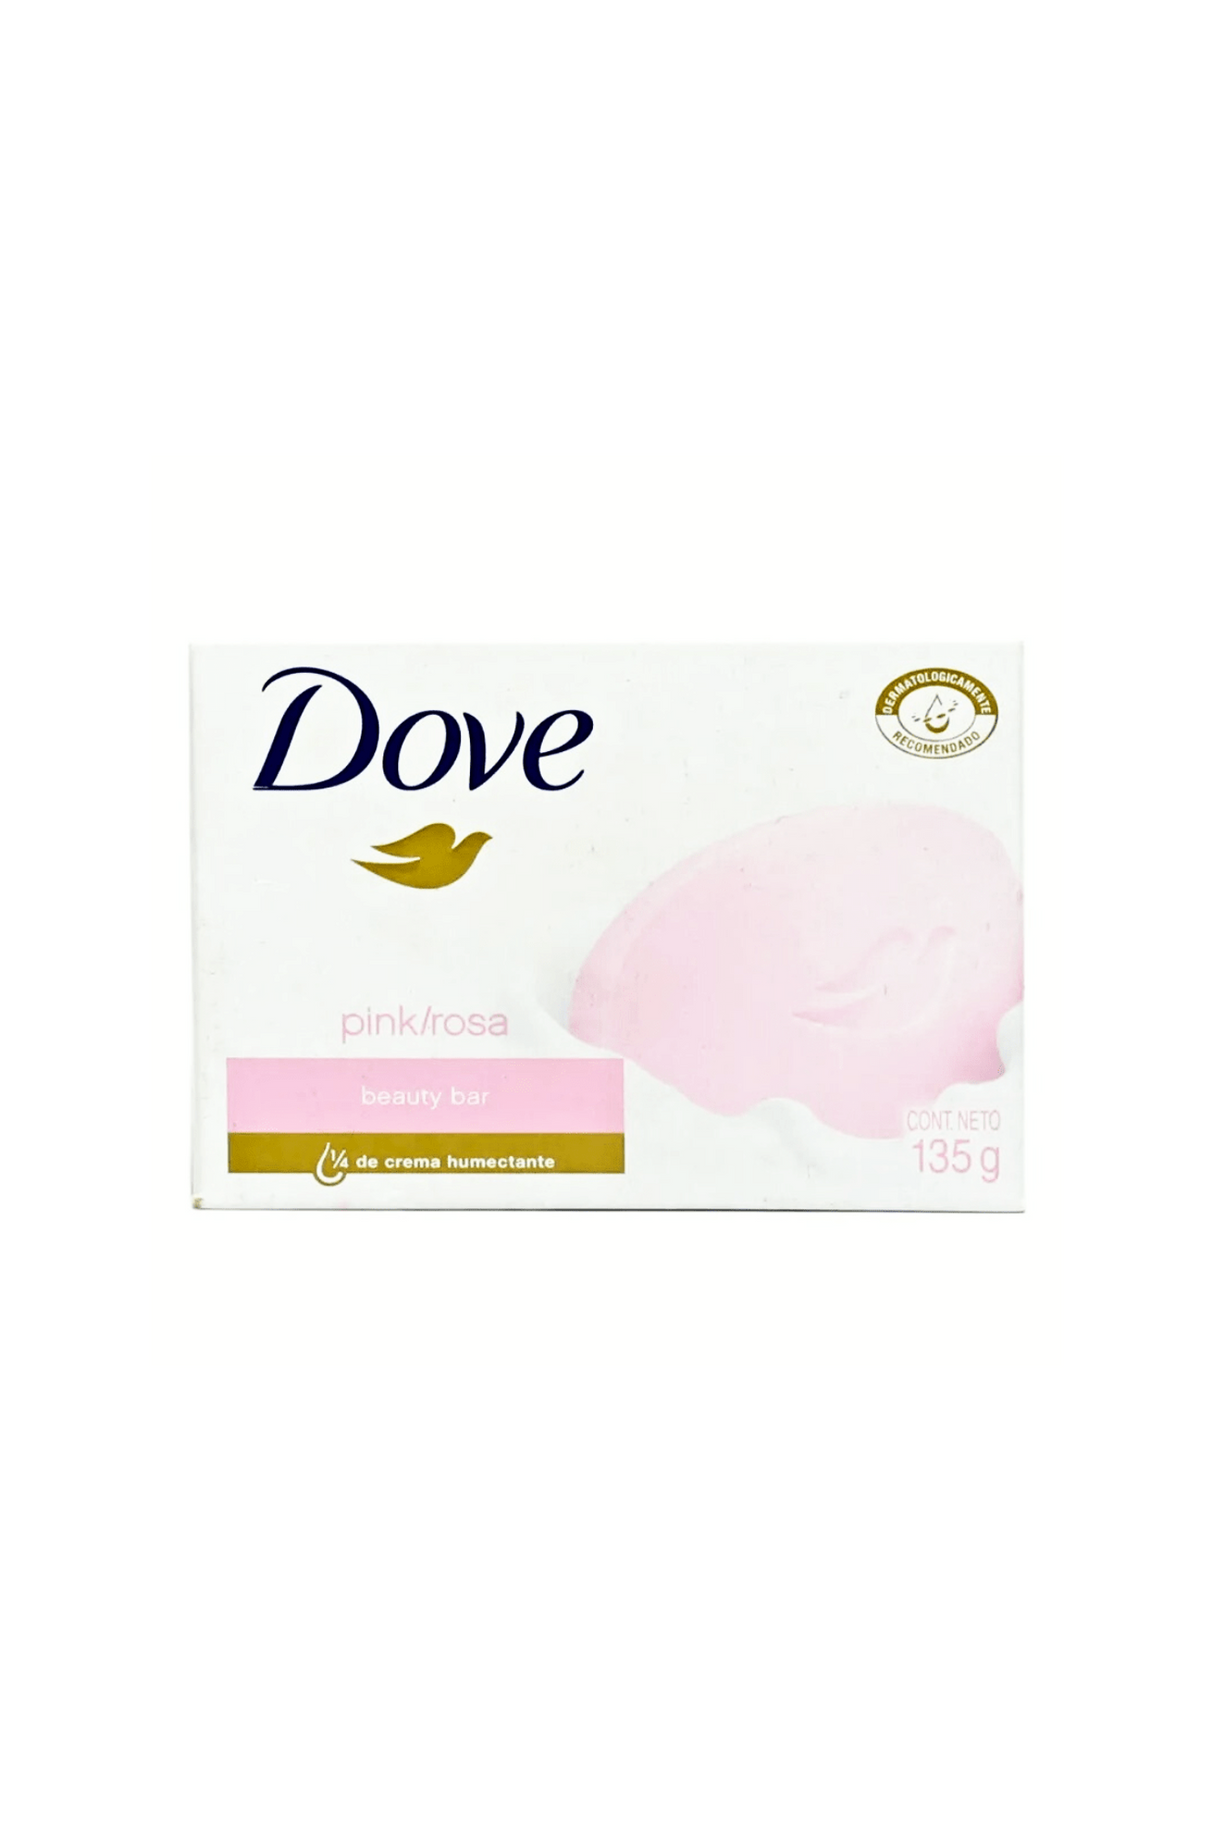 dove soap pink/rose 135g